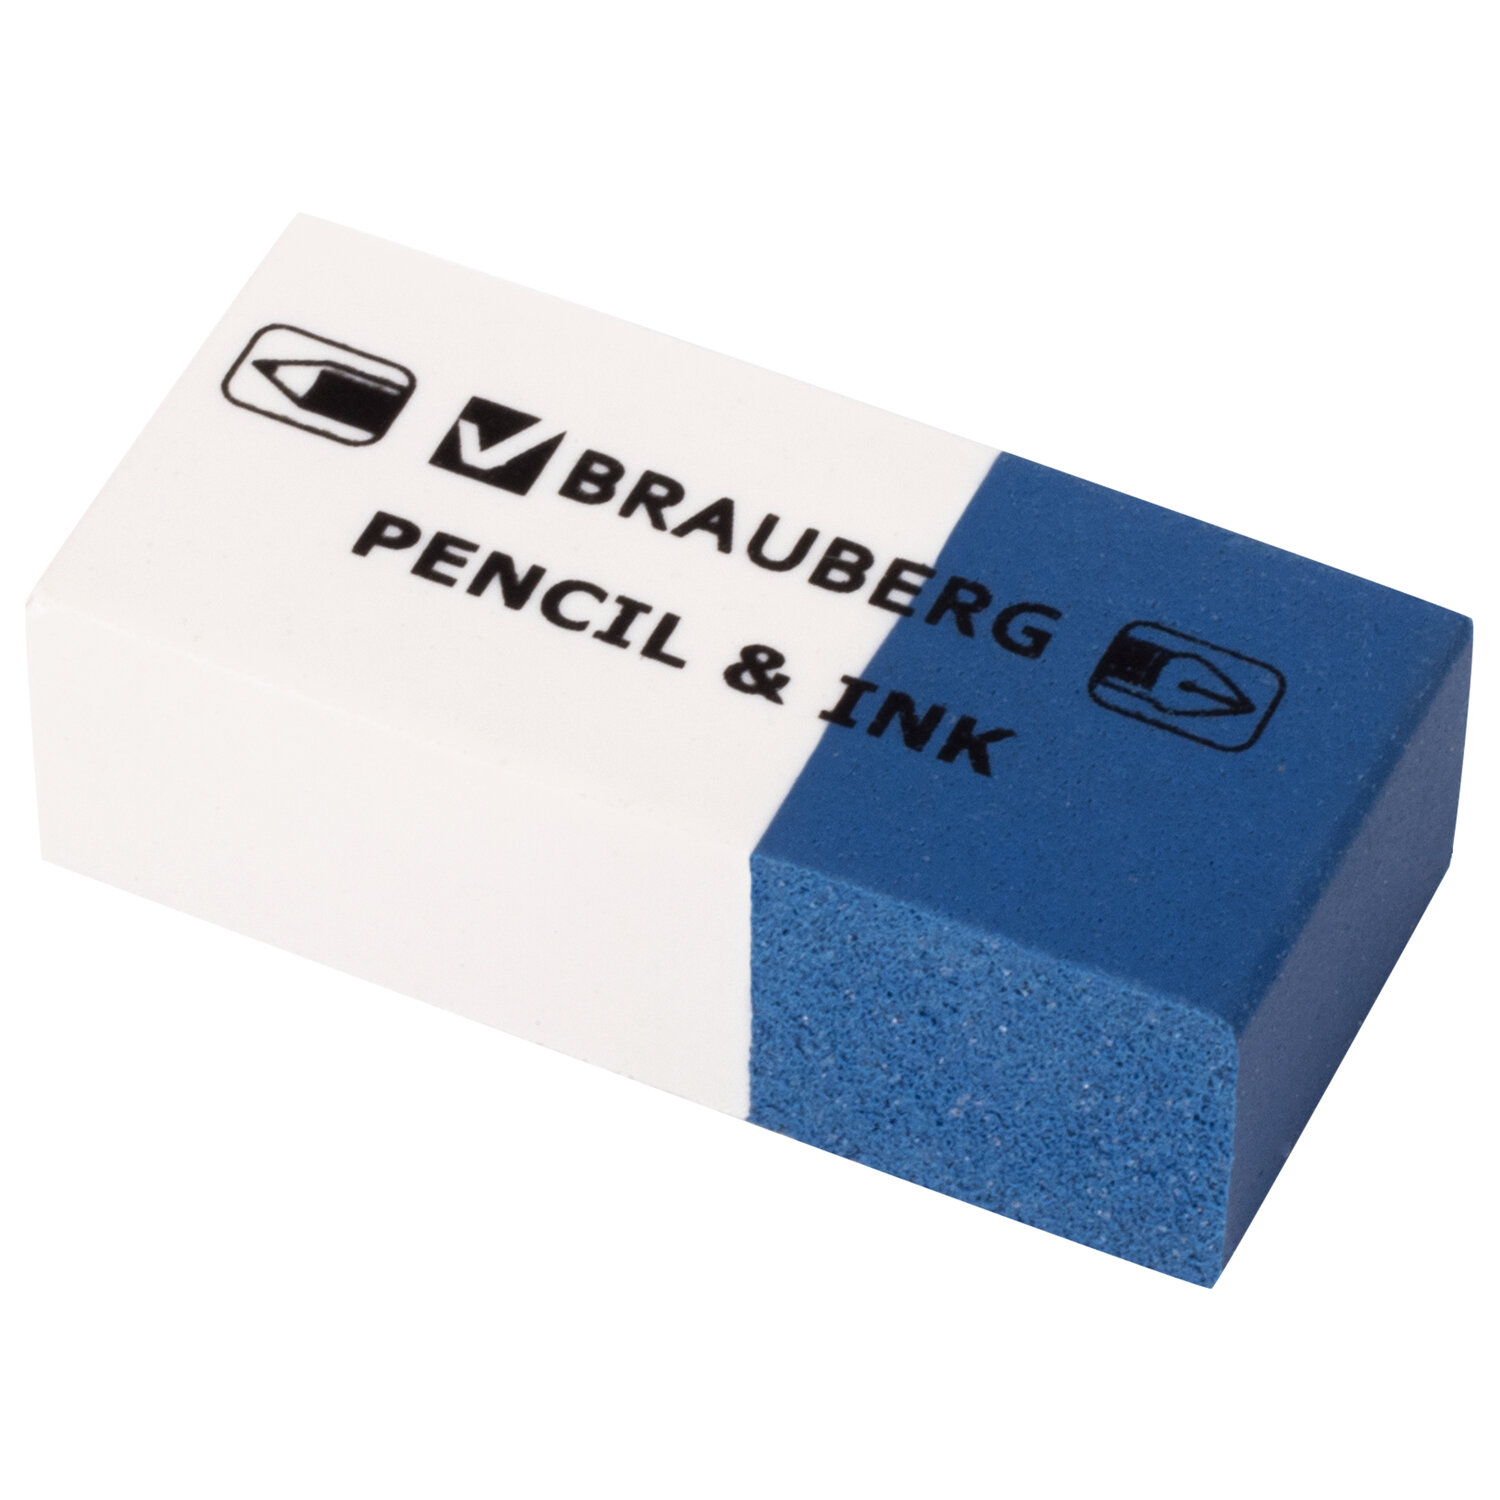 Ластик BRAUBERG "PENCIL & INK", 39*18*12мм, для ручки и карандаша, бело-синий, 229578